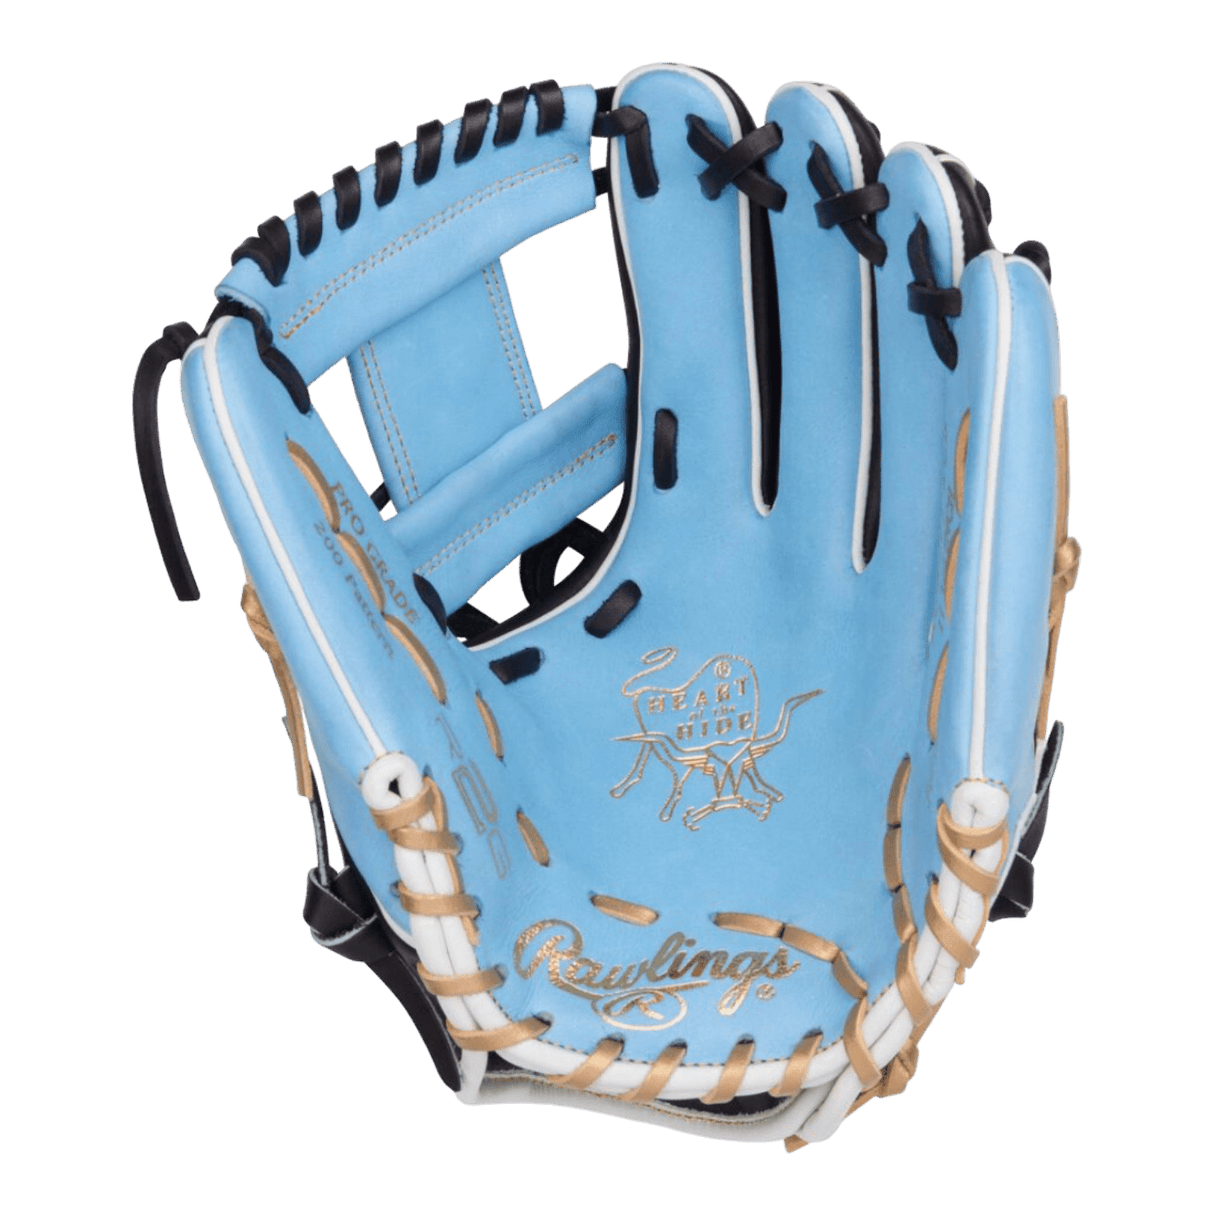 Rawlings HOH R2G 11.75” Baby Blue Infield Glove